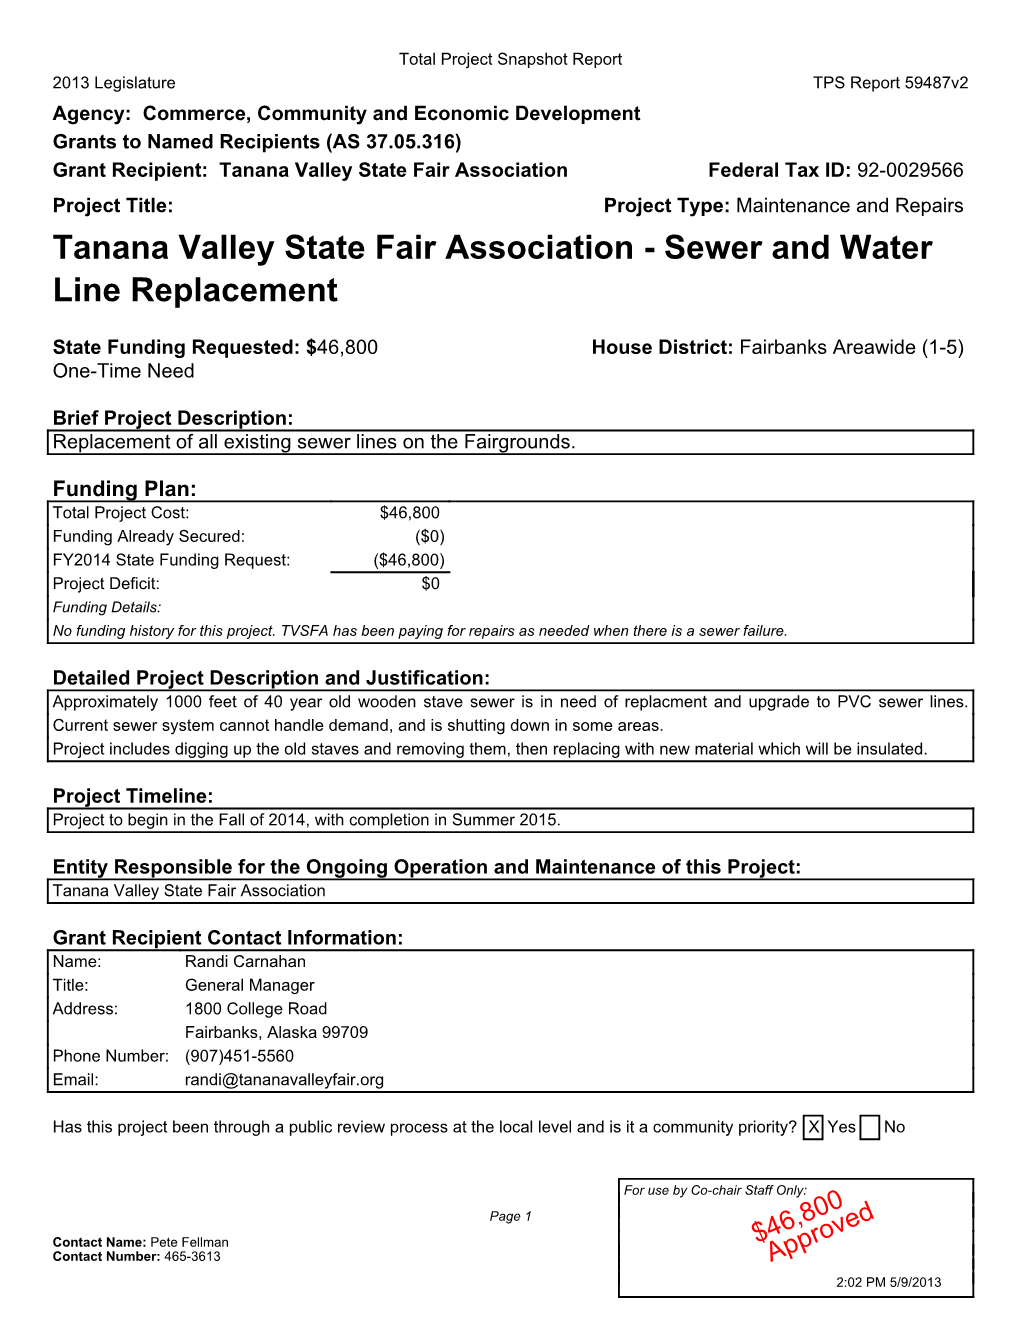 Tanana Valley State Fair Association